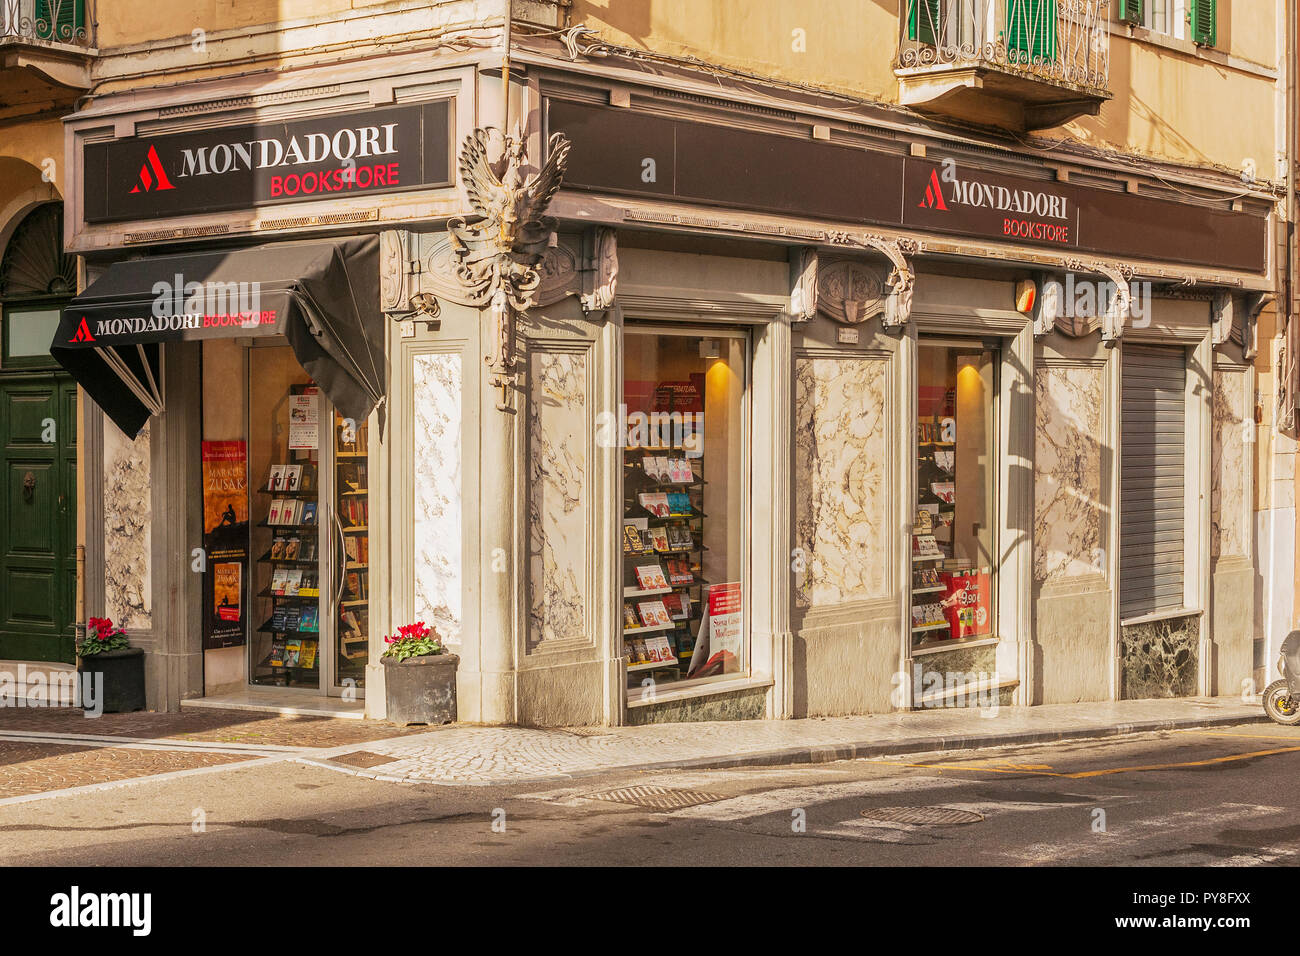 CARRARA. Italien - Oktober 25, 2018 - Mondadori Buchhandlung im alten Gebäude in Carrara, Toskana Stockfoto